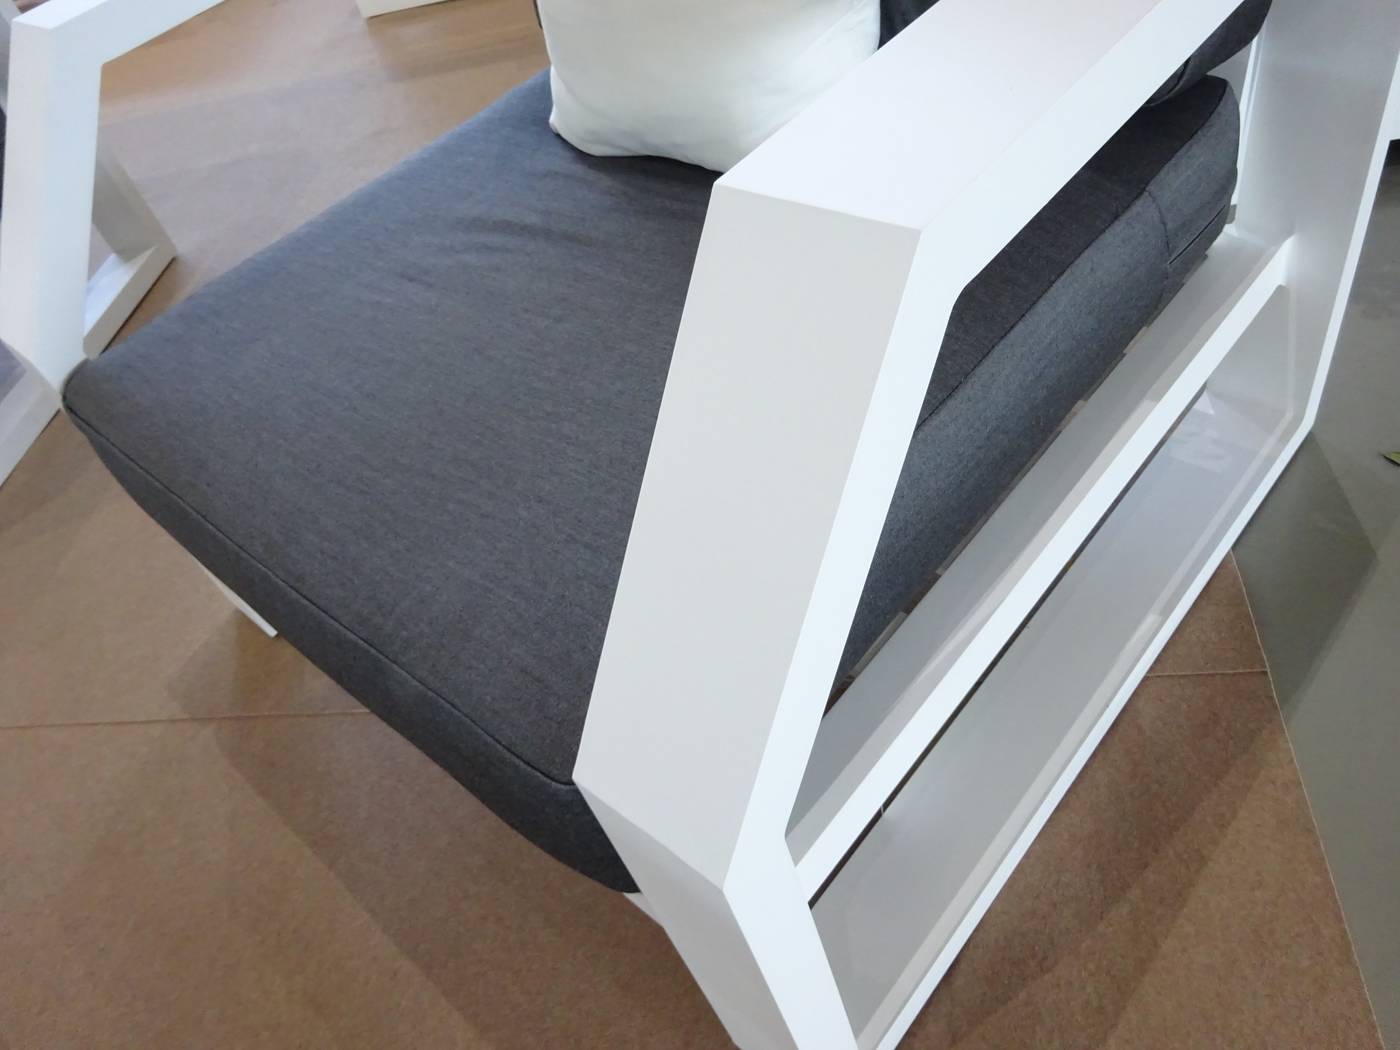 Set Aluminio Luxe Zafiro-10 - Conjunto lujo de aluminio: 1 sofá de 3 plazas + 2 sillones + 1 mesa de centro + 2 reposapiés. Disponible en color blanco, antracita, champagne, plata o marrón